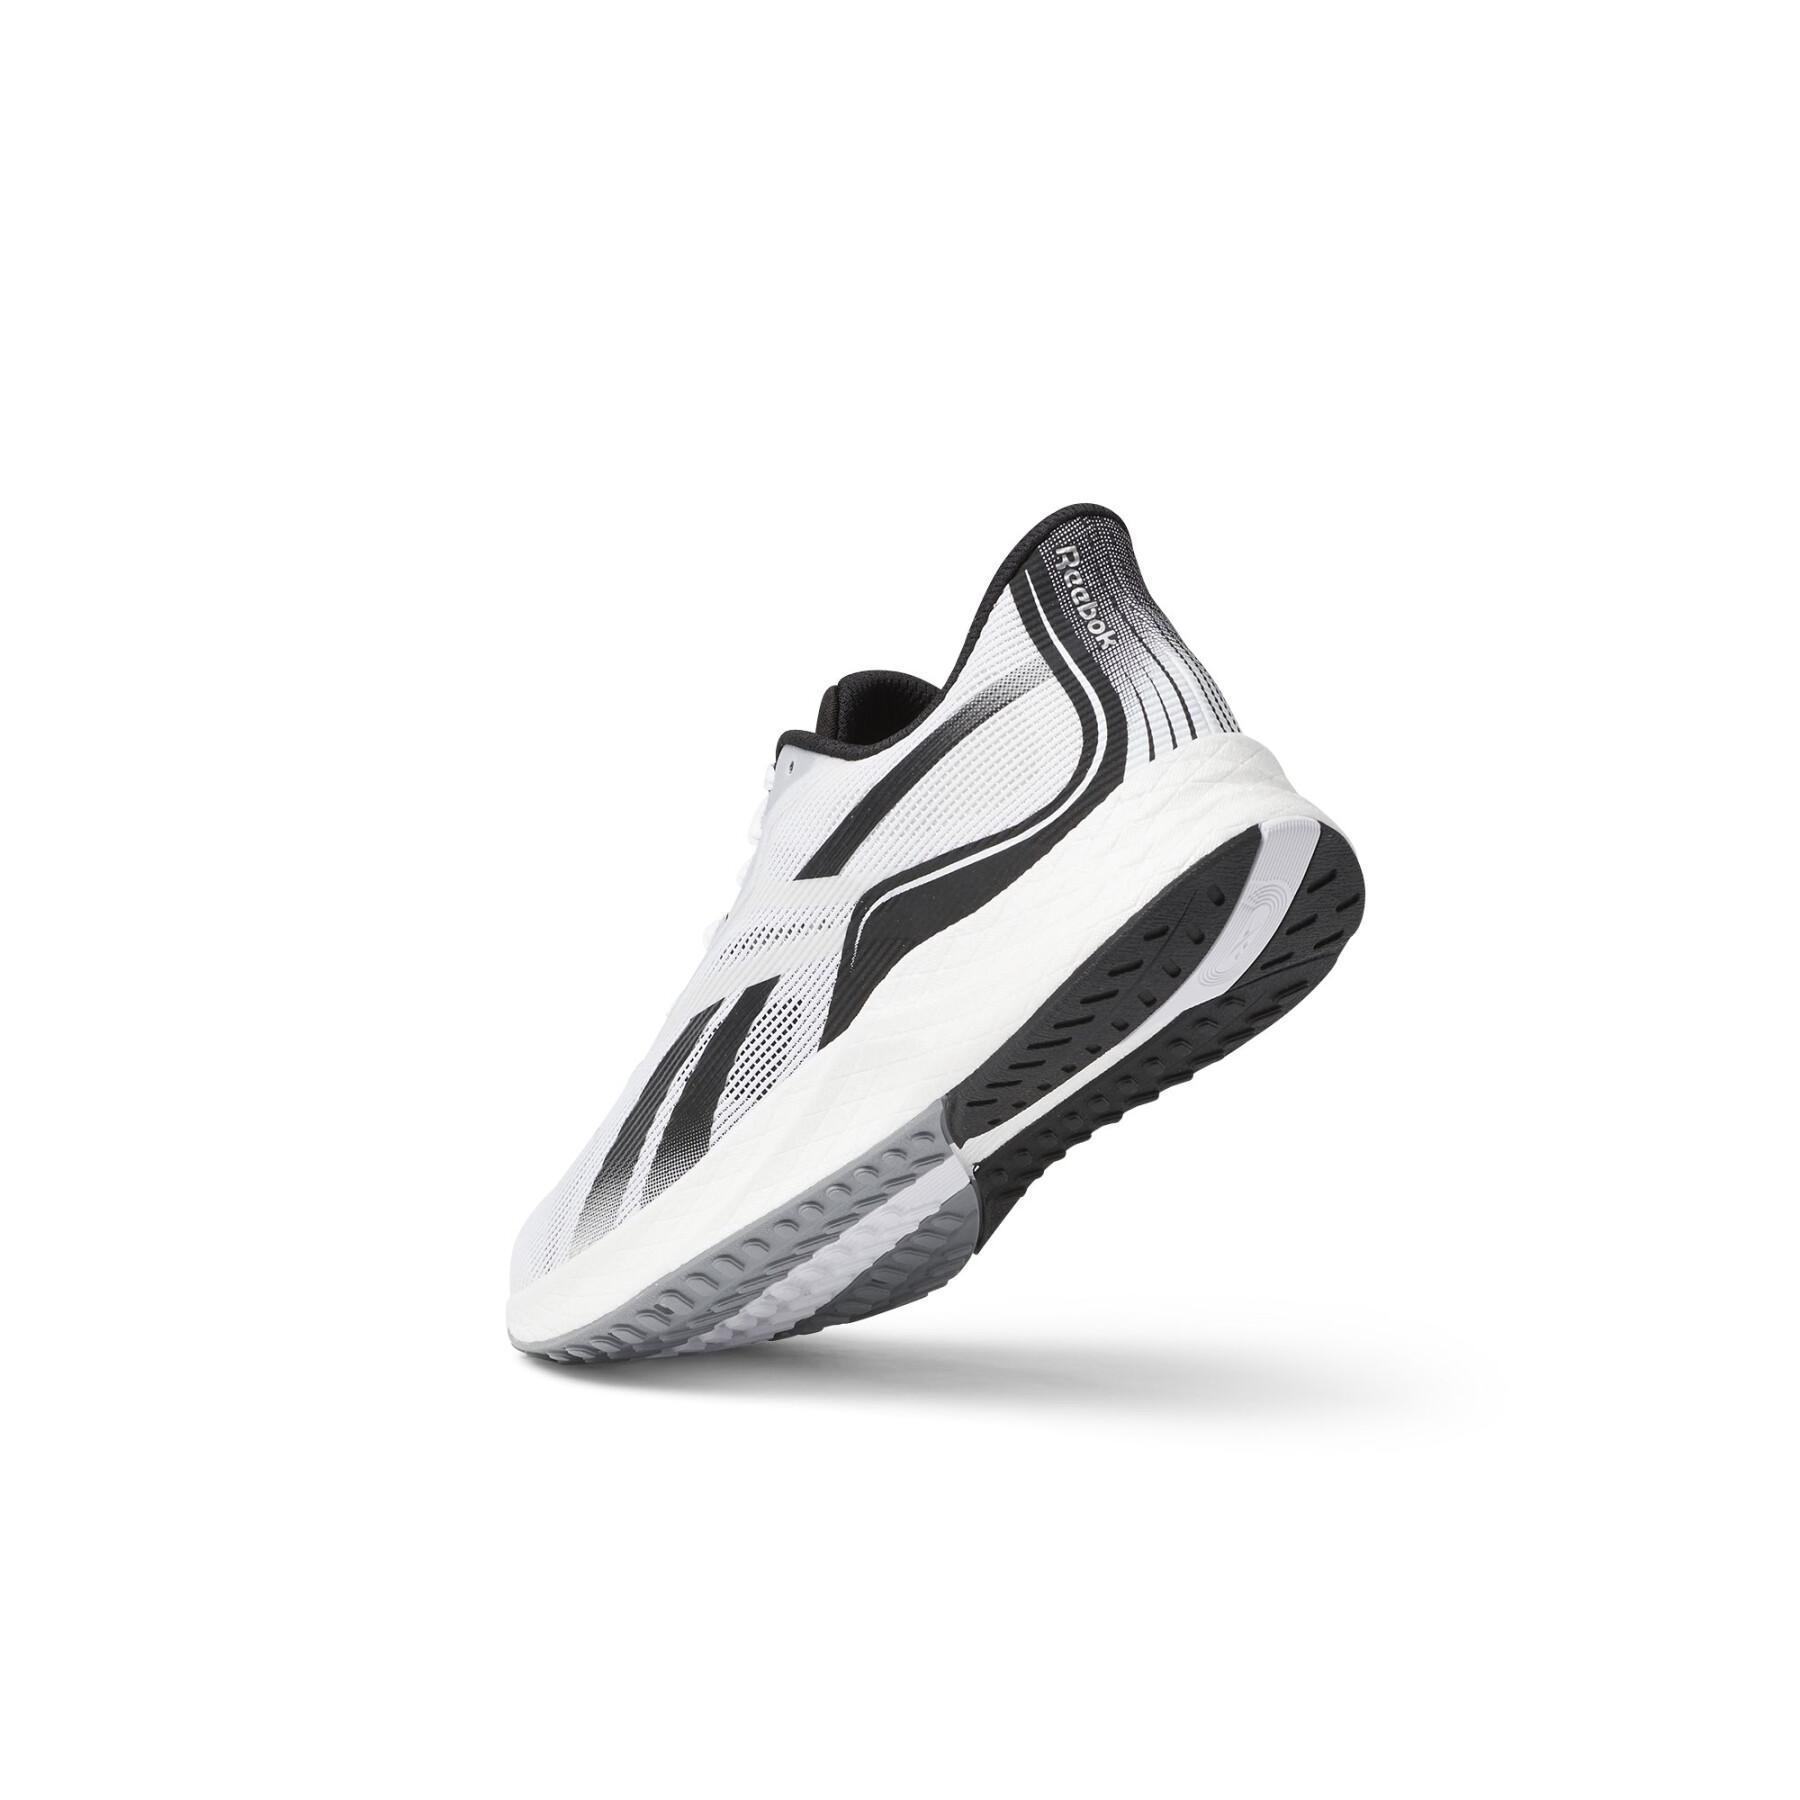 Zapatos Reebok Floatride Energy 3